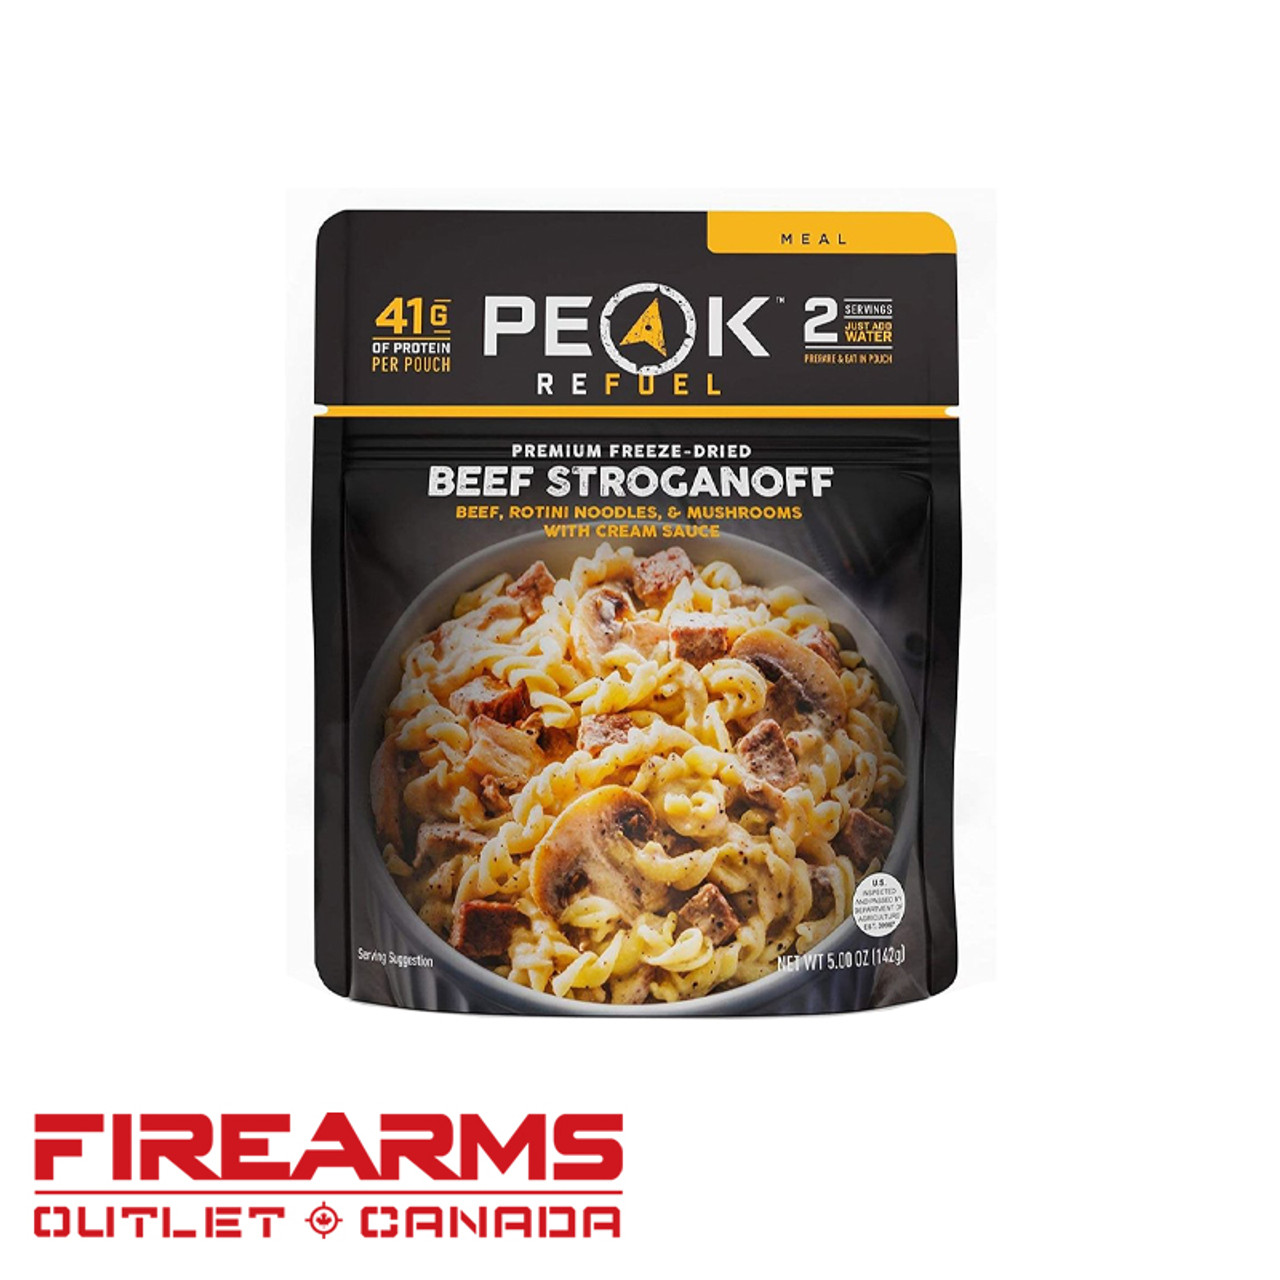 Peak Refuel - Beef Stroganoff [57783]